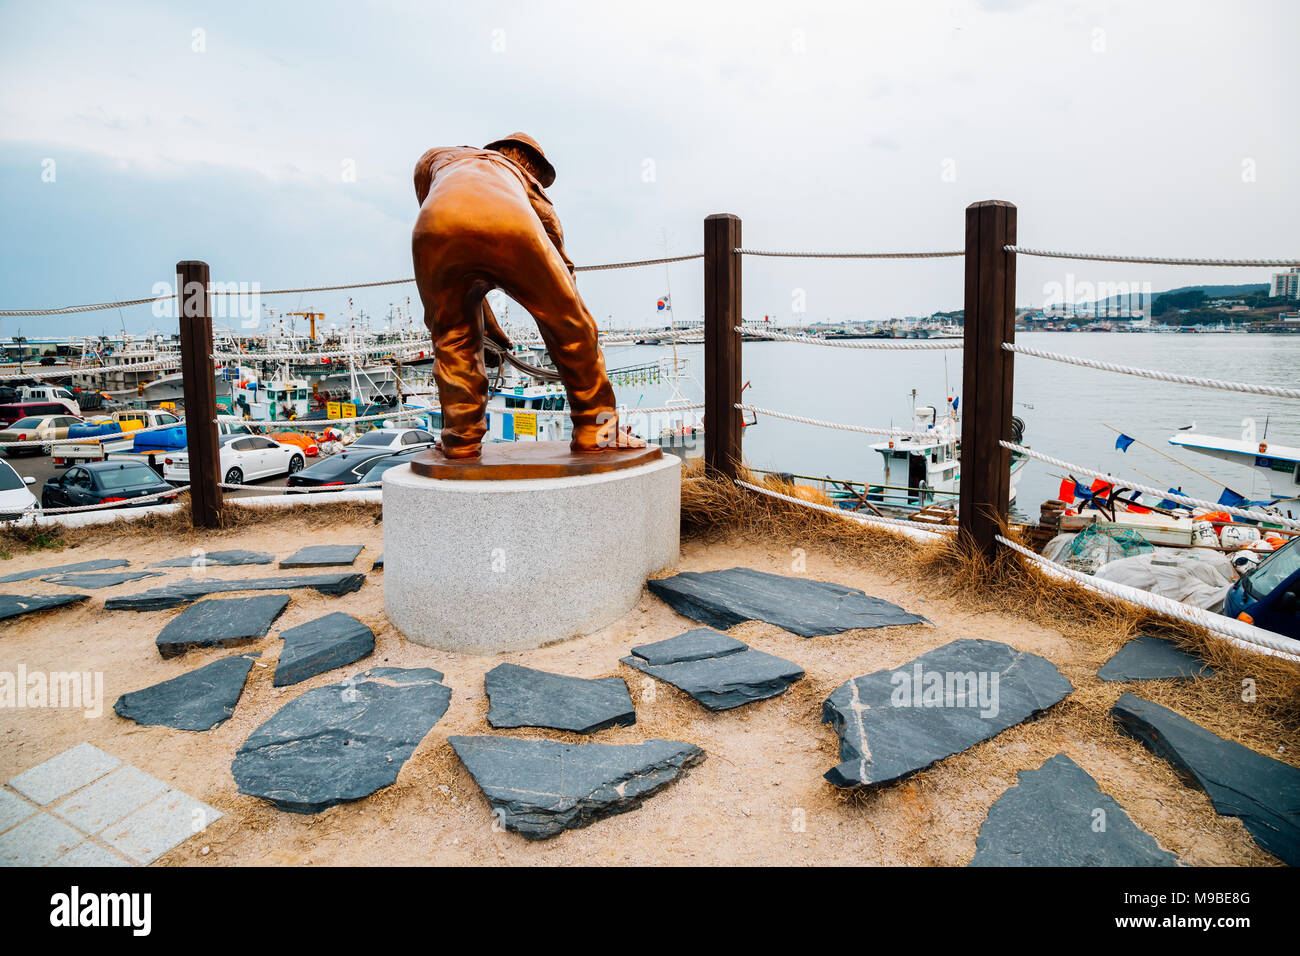 Pohang, Korea - February 8, 2017 : Fisherman statue in Guryongpo port Stock Photo